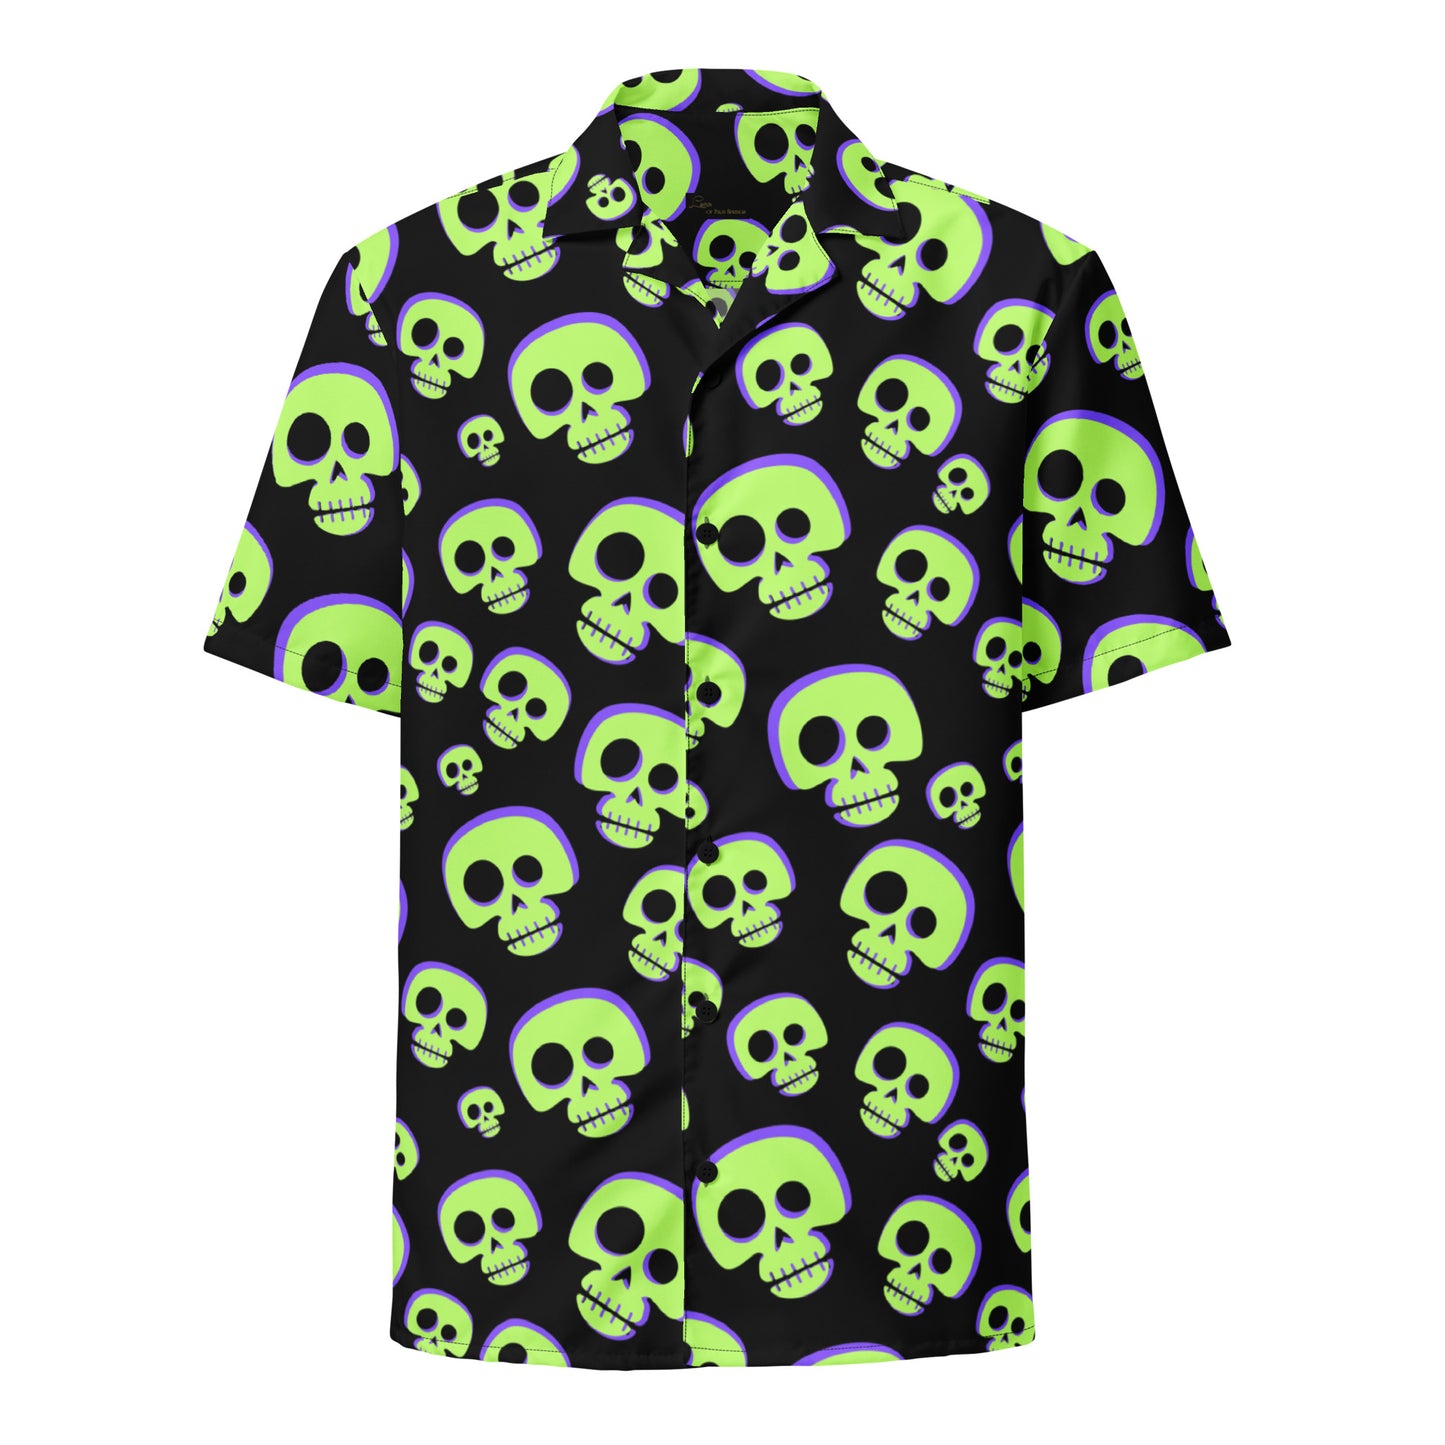 "The Zombie" Unisex button shirt